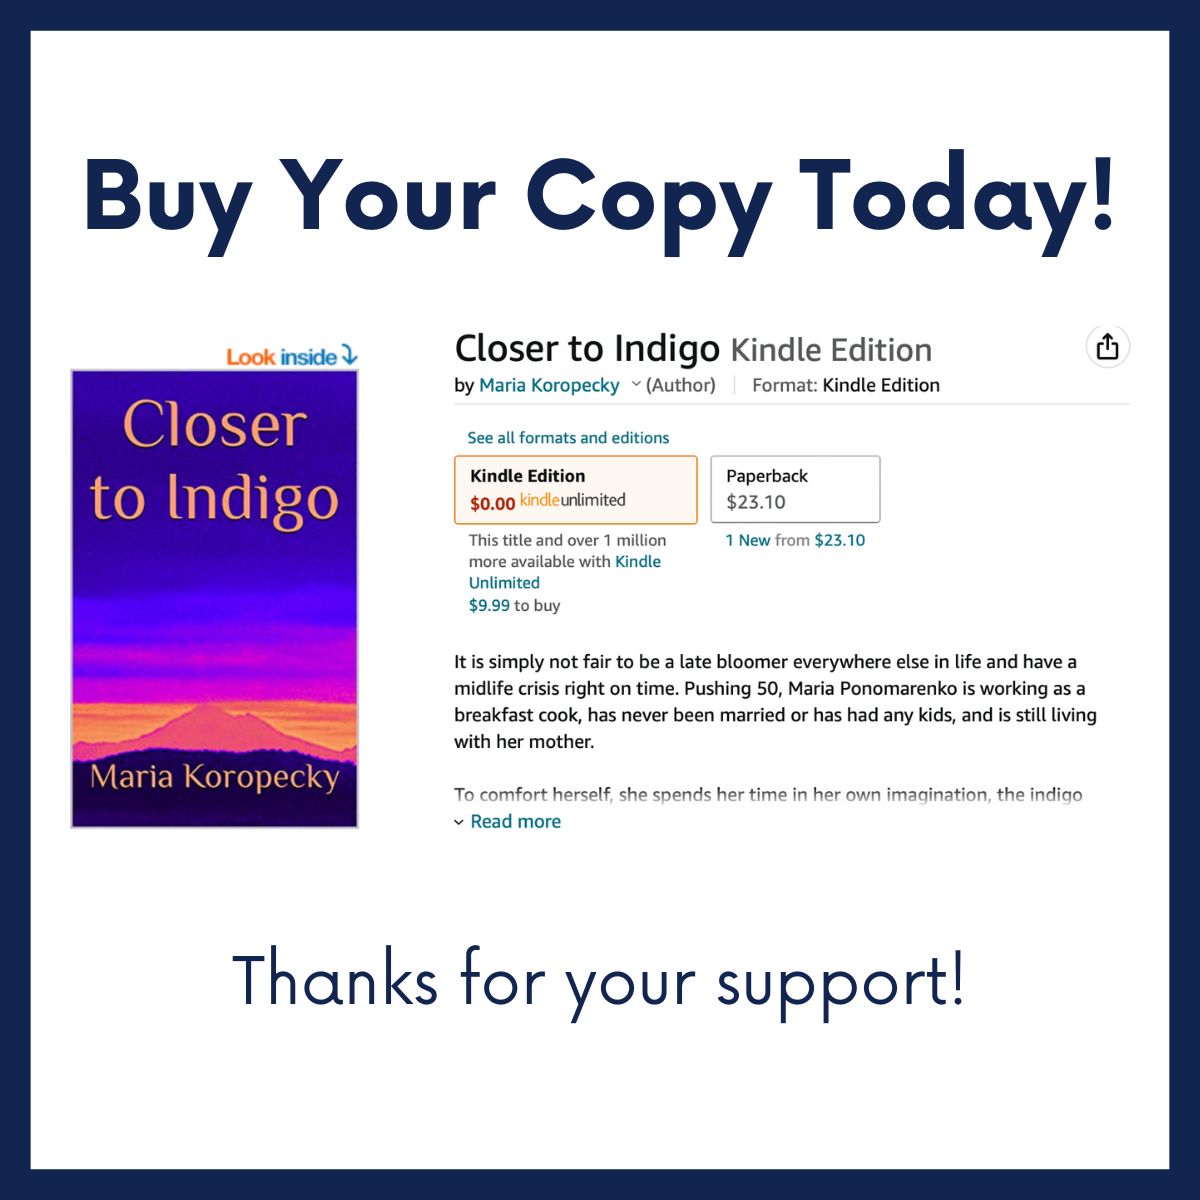 Buy your copy of Closer to Indigo today!